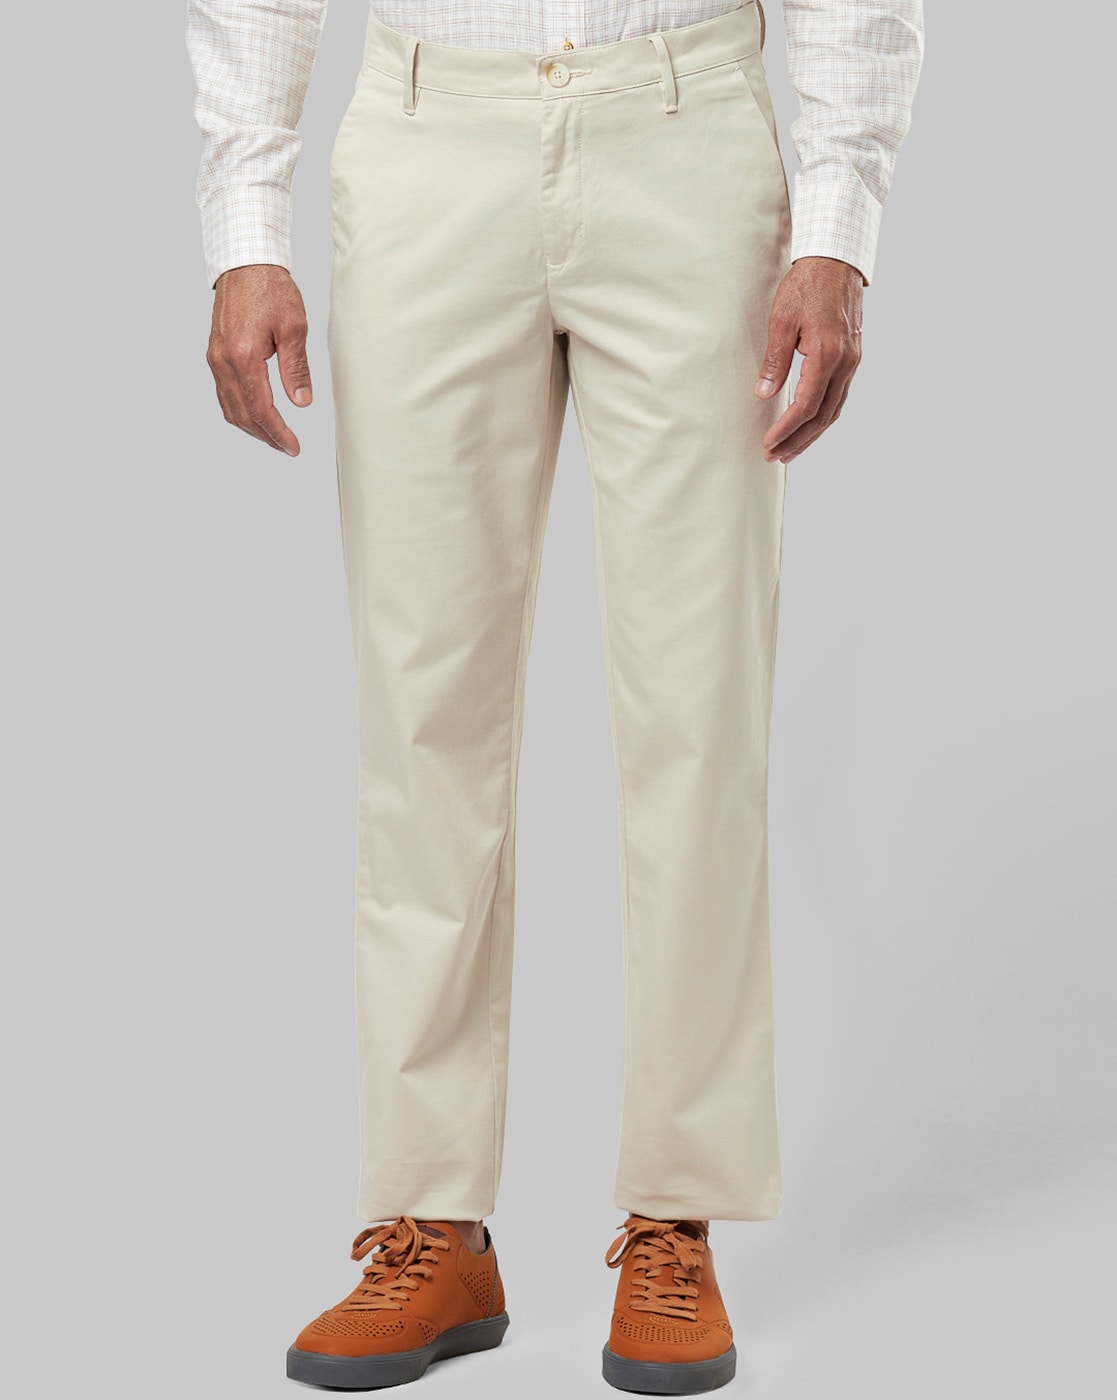 Raymond Beige Regular Flat Trouser  Buy Raymond Beige Regular Flat Trouser  Online at Low Price in India  Snapdeal